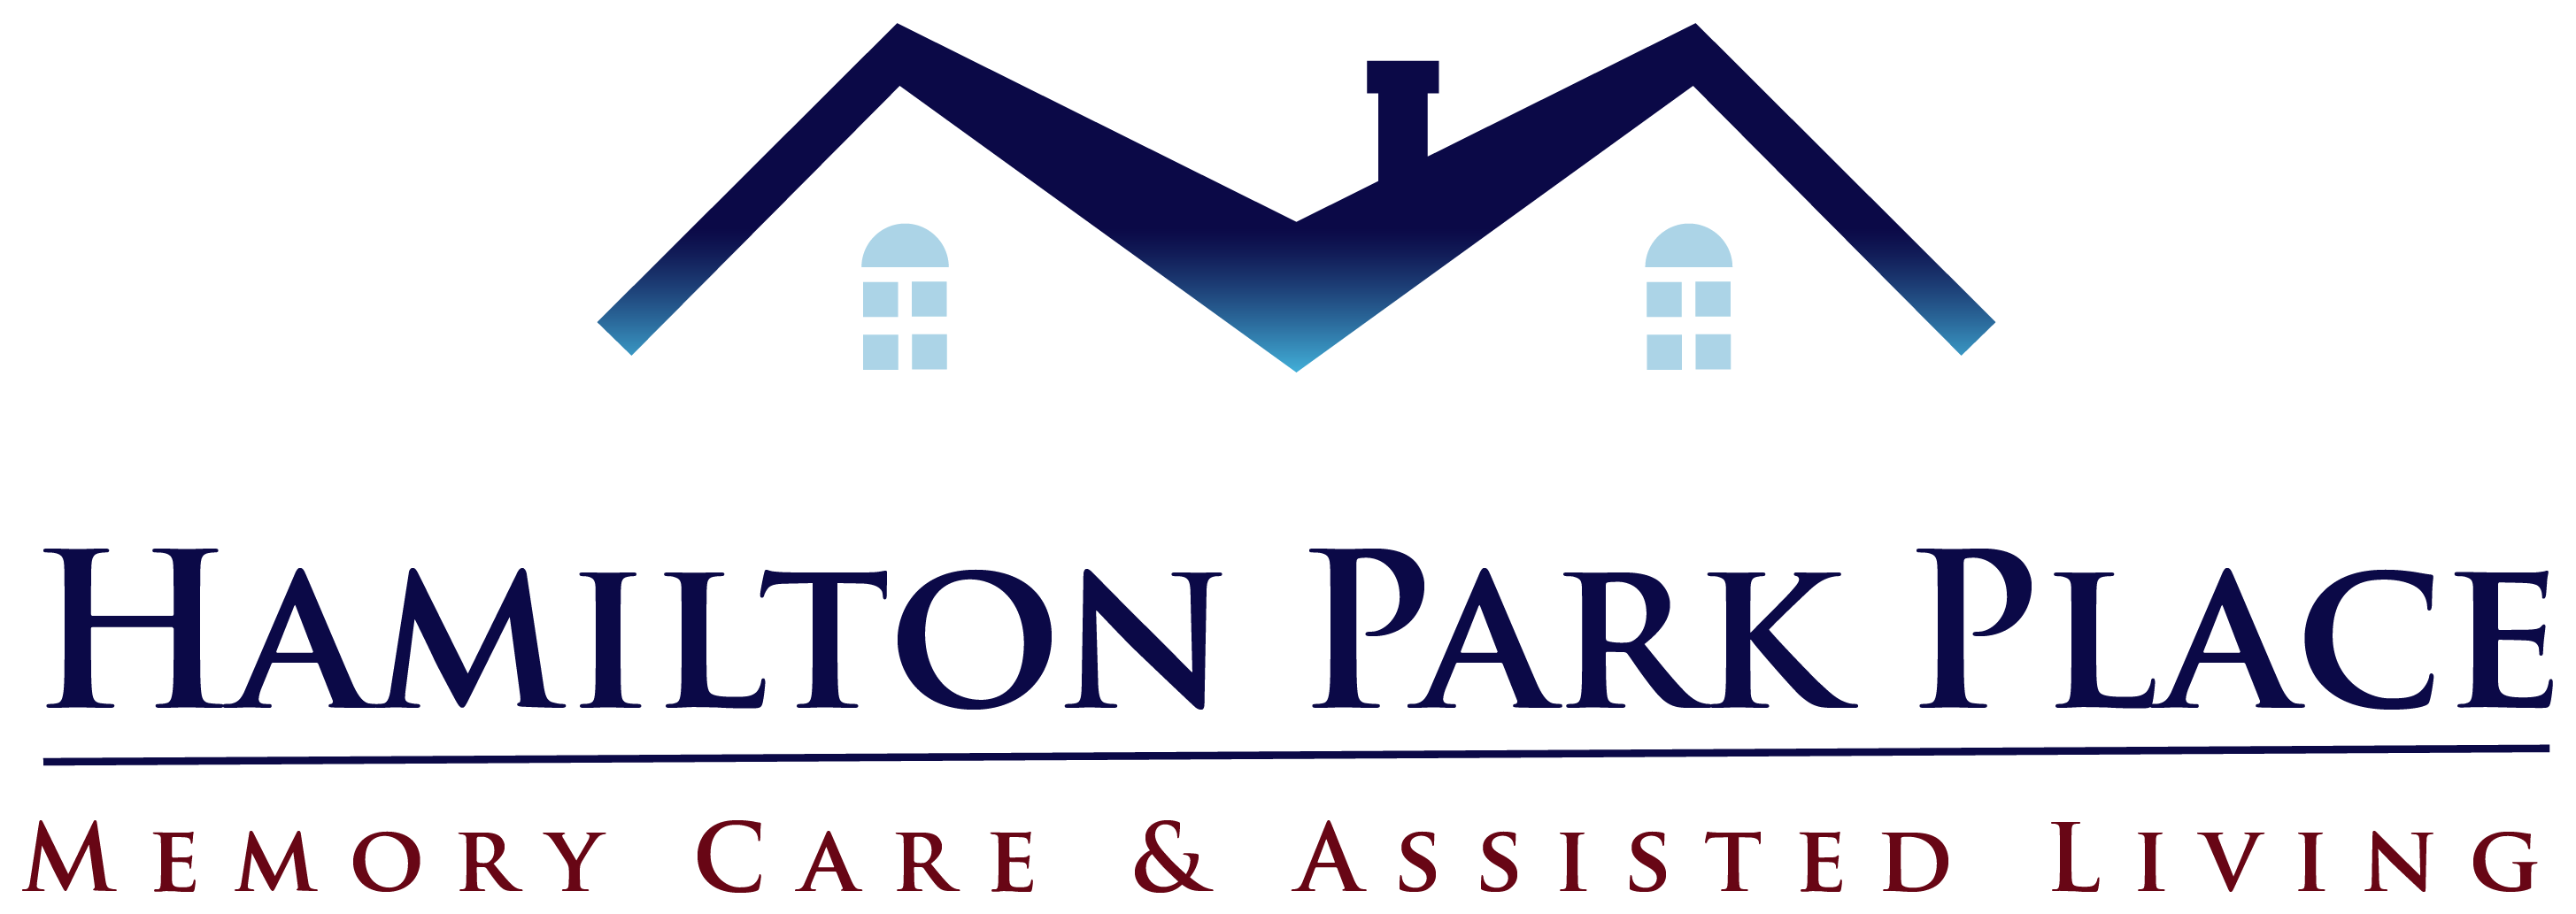 Hamilton park place memory care & assisted living logo.